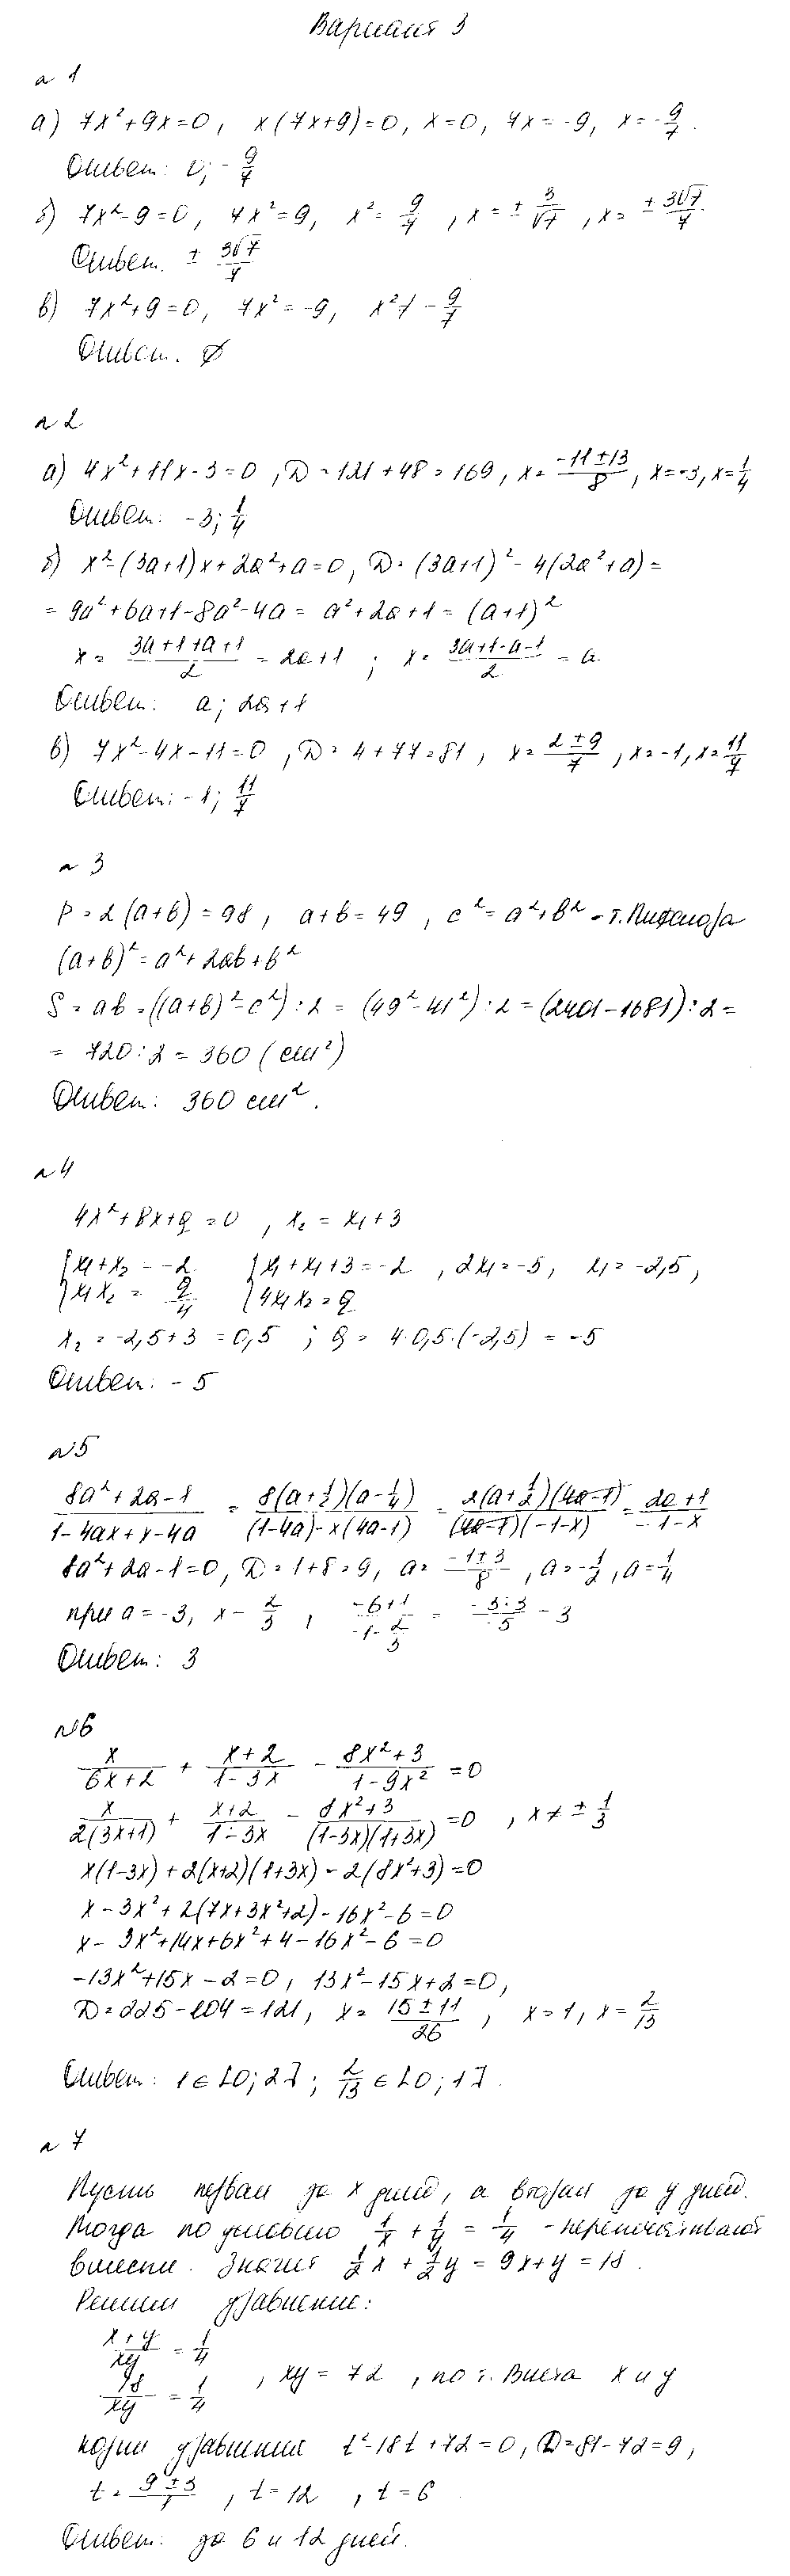 ГДЗ Алгебра 8 класс - Вариант 3